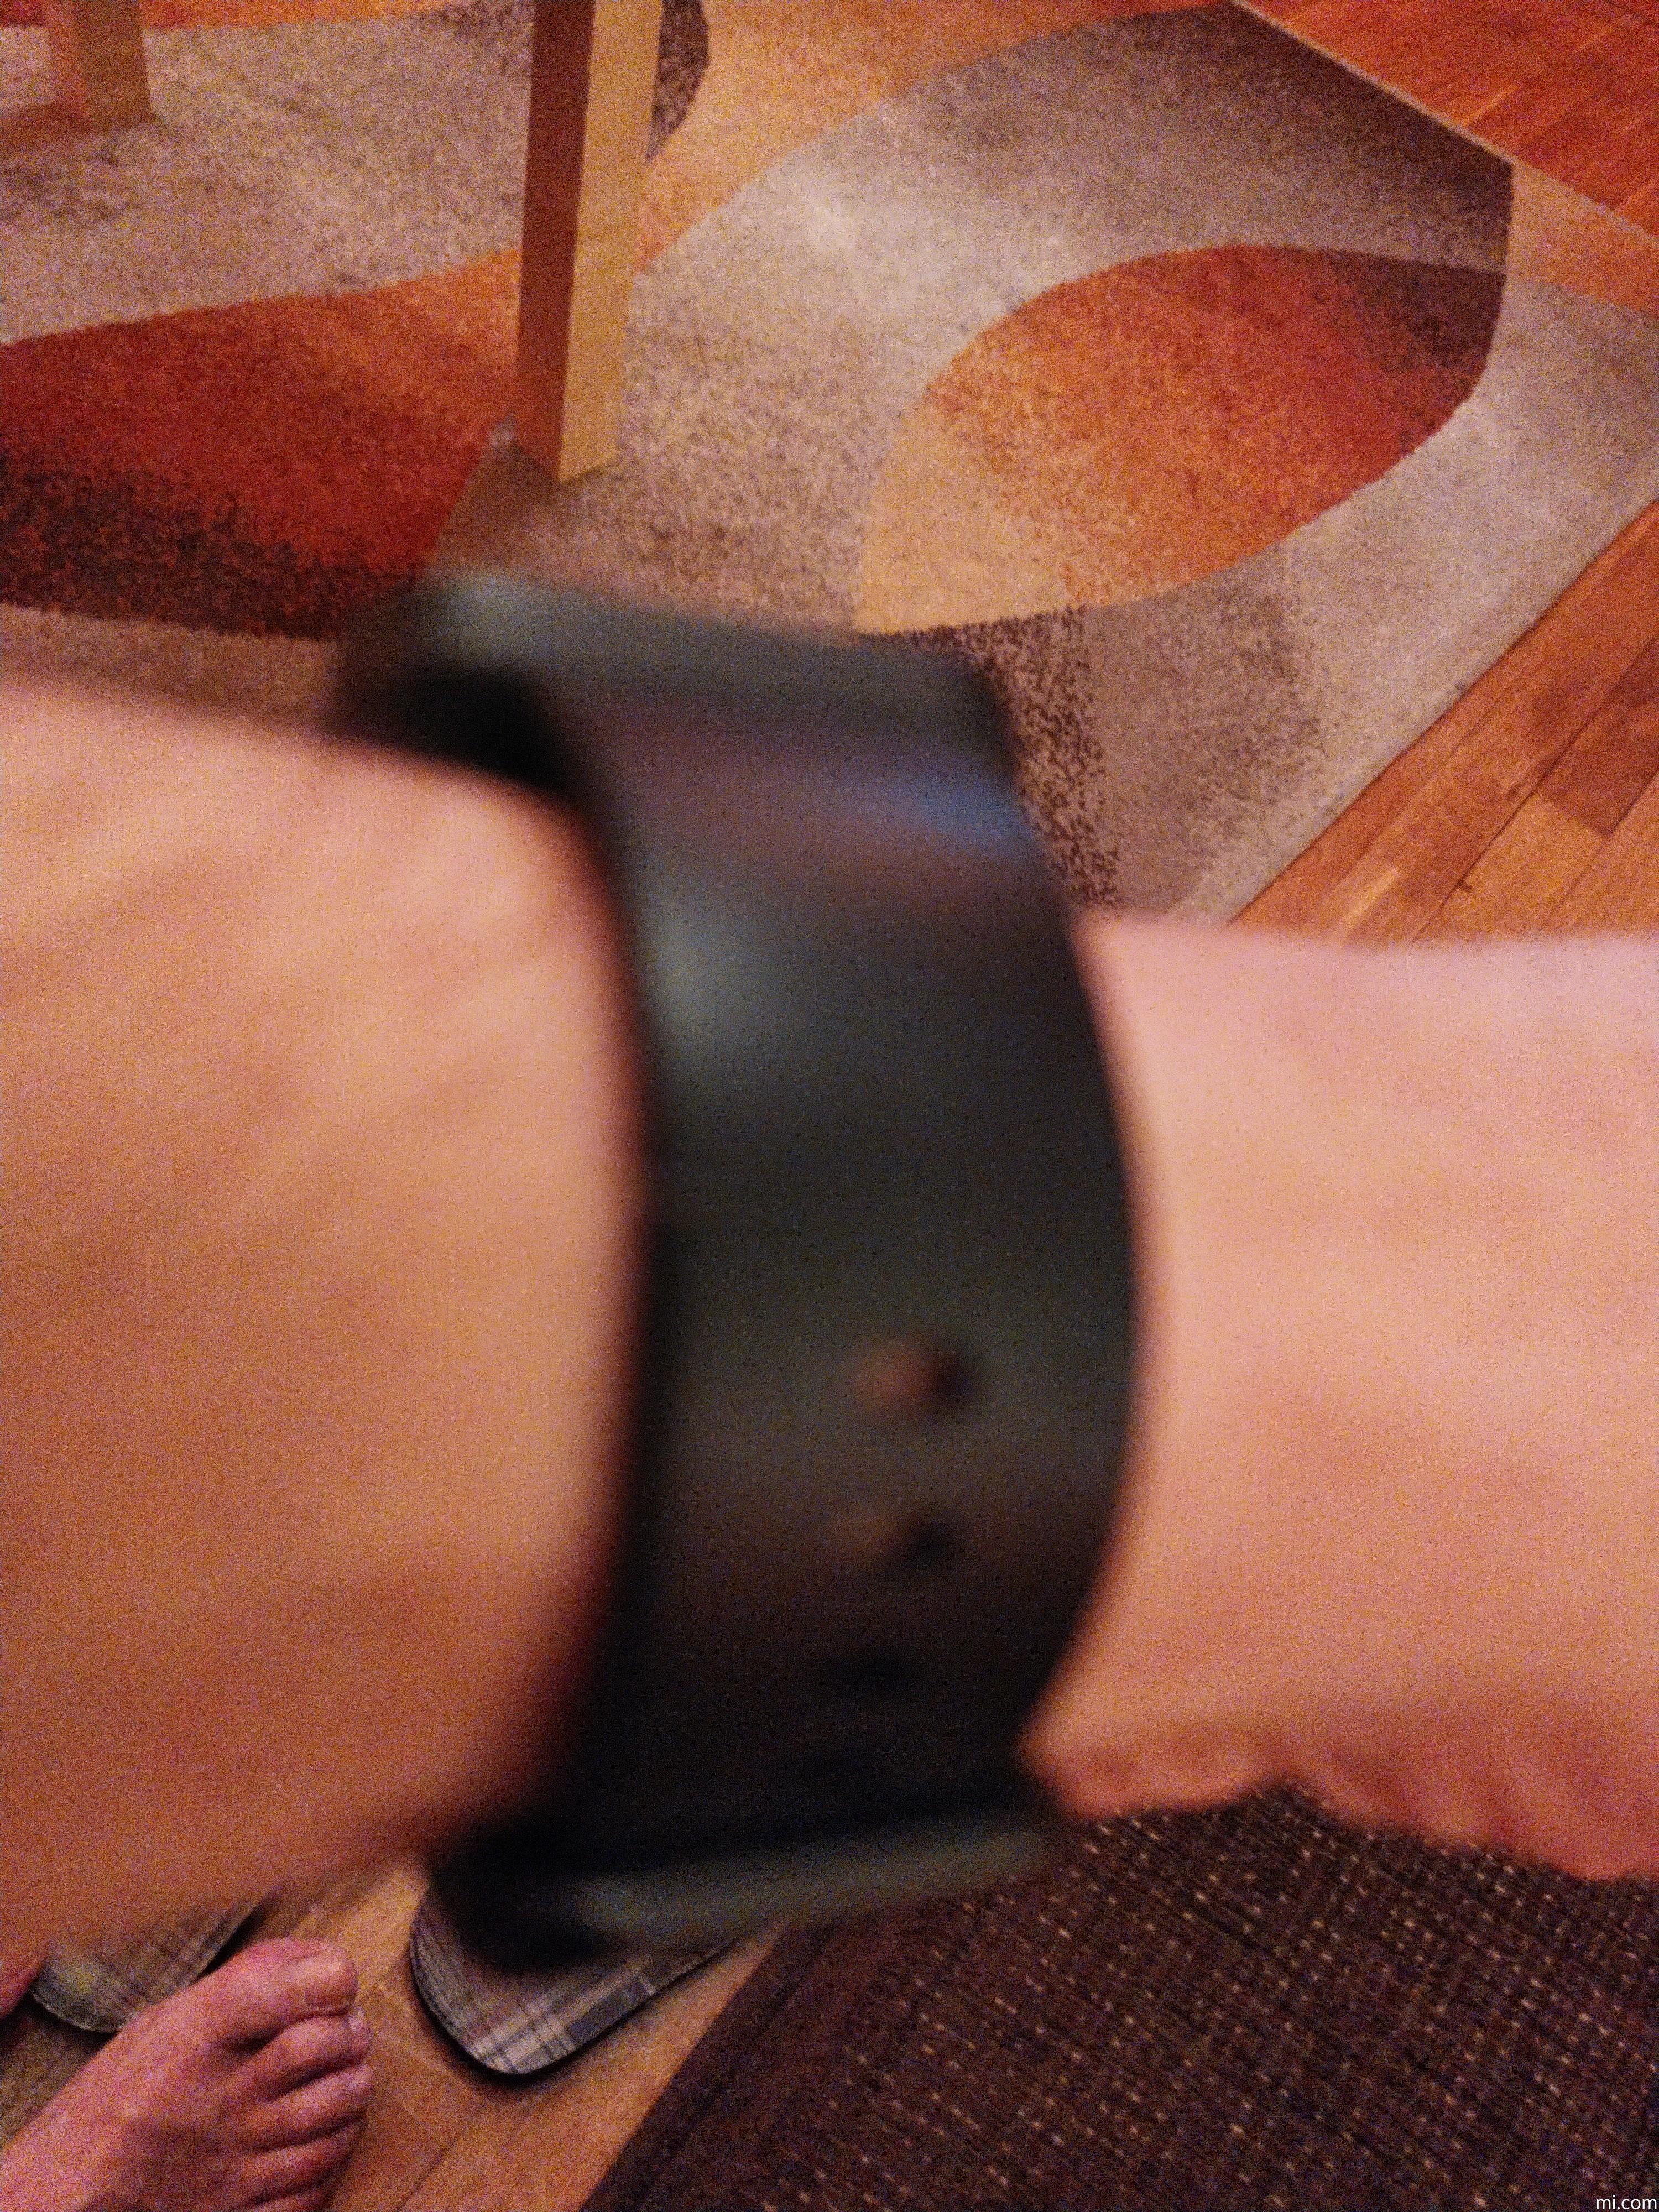 Mi Watch Lite Strap, Xiaomi España